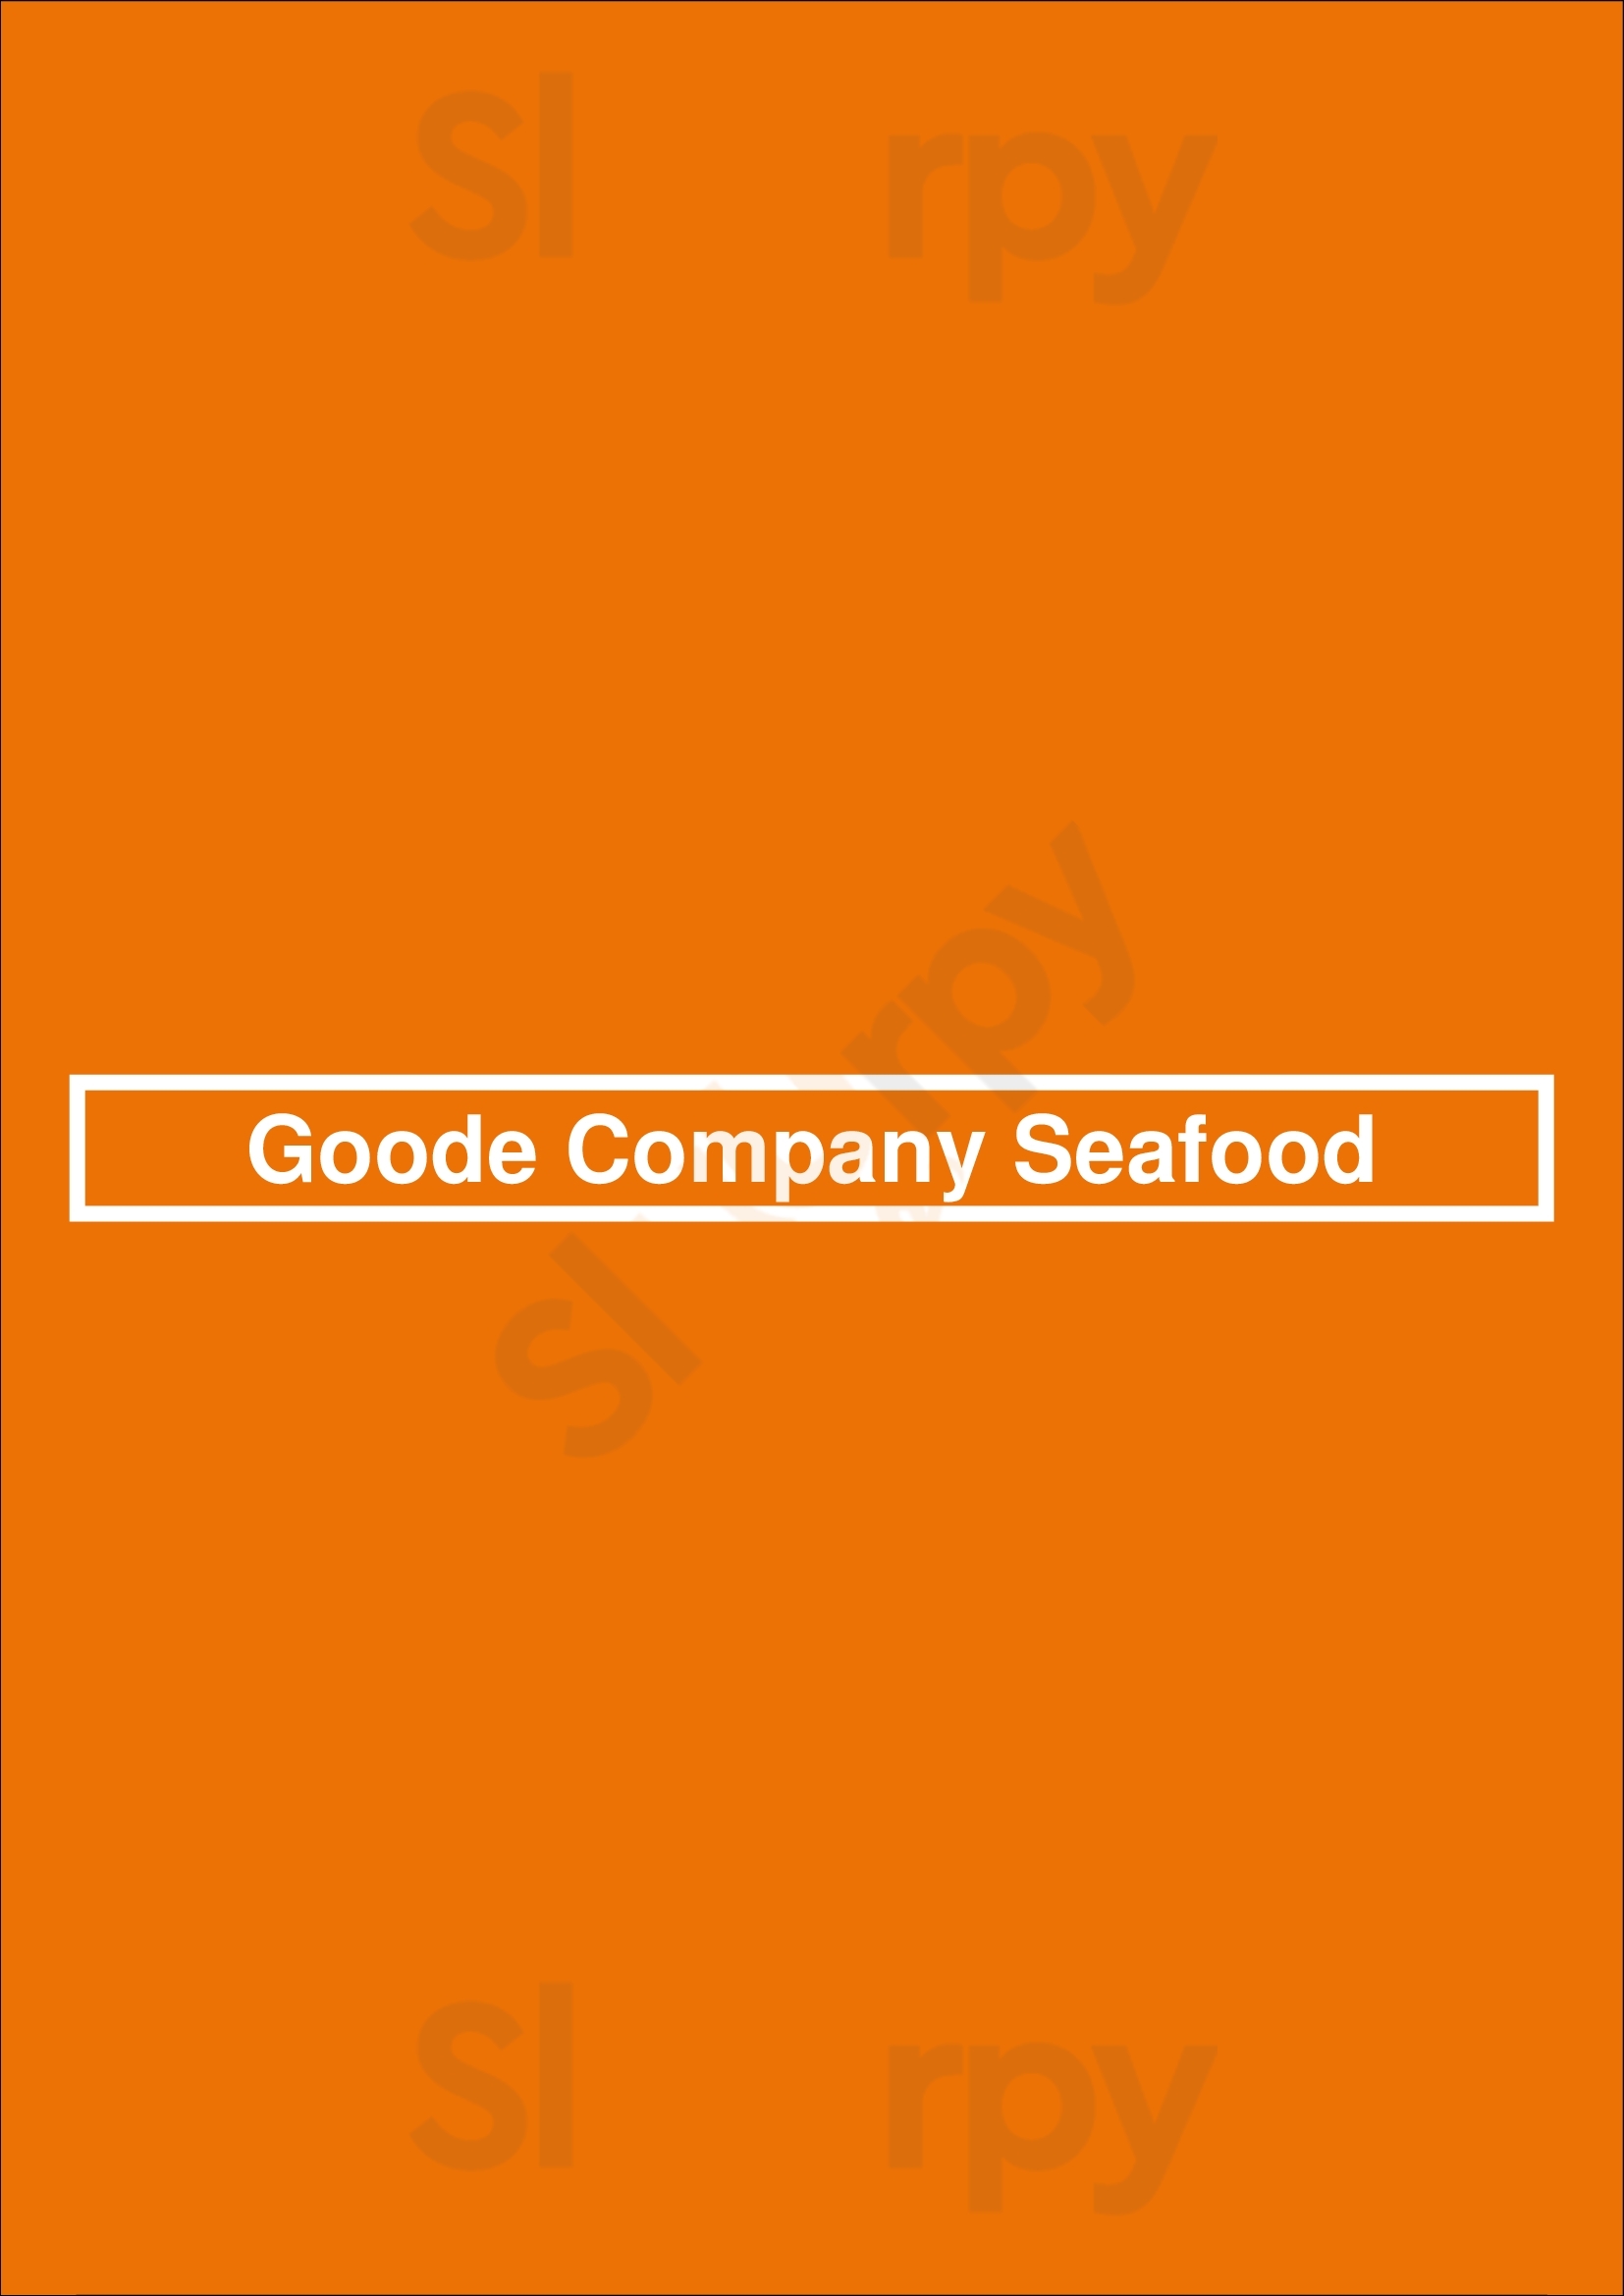 Goode Company Seafood Houston Menu - 1